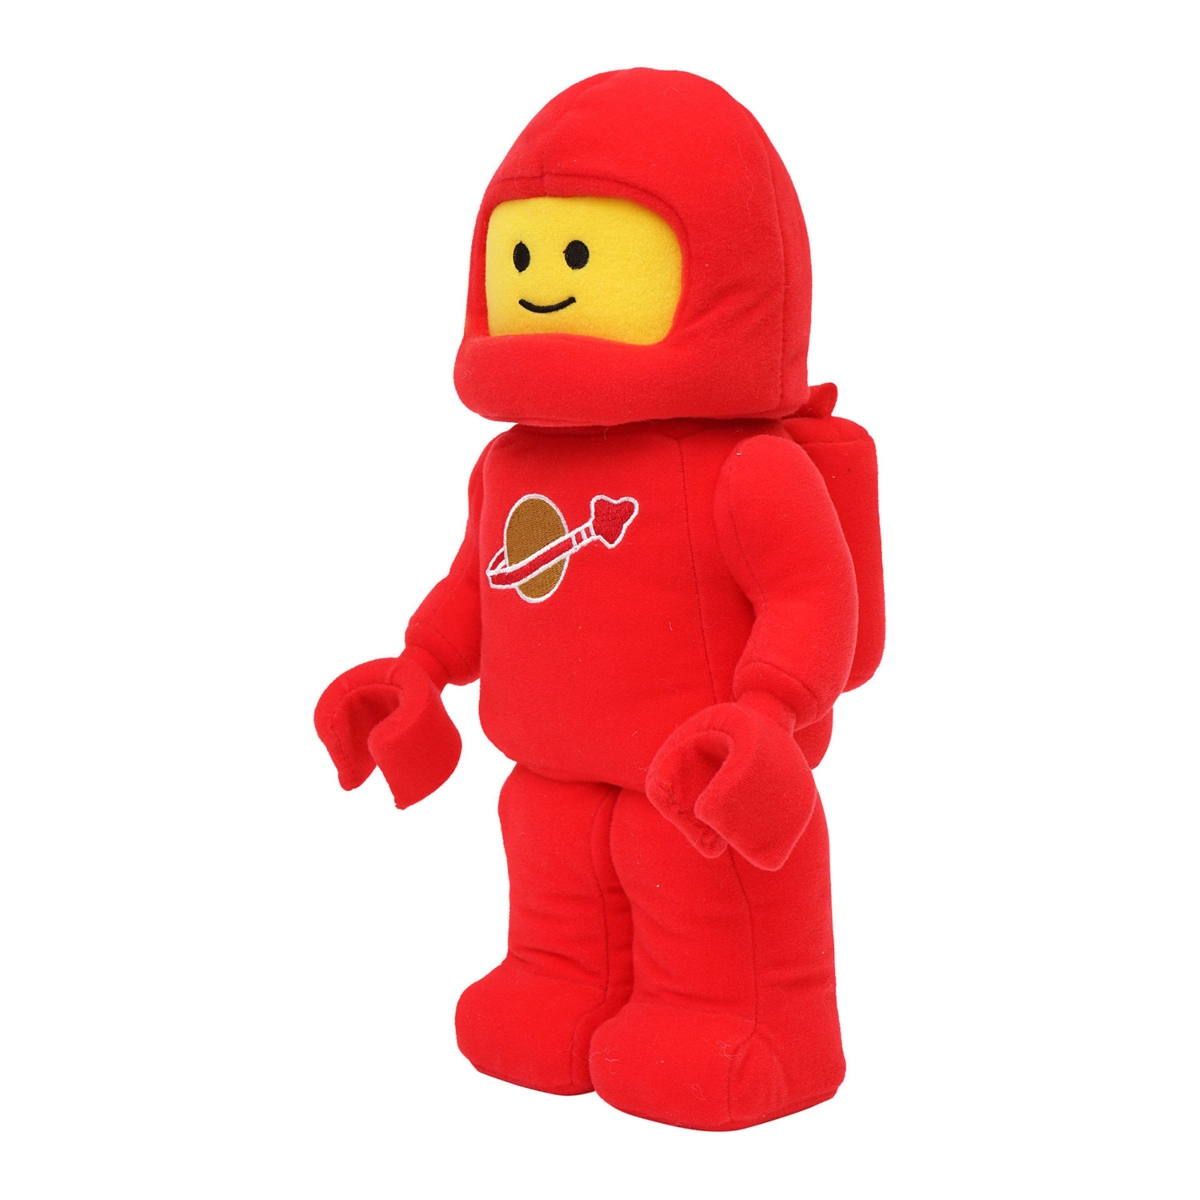 astronaut plush red 5008786